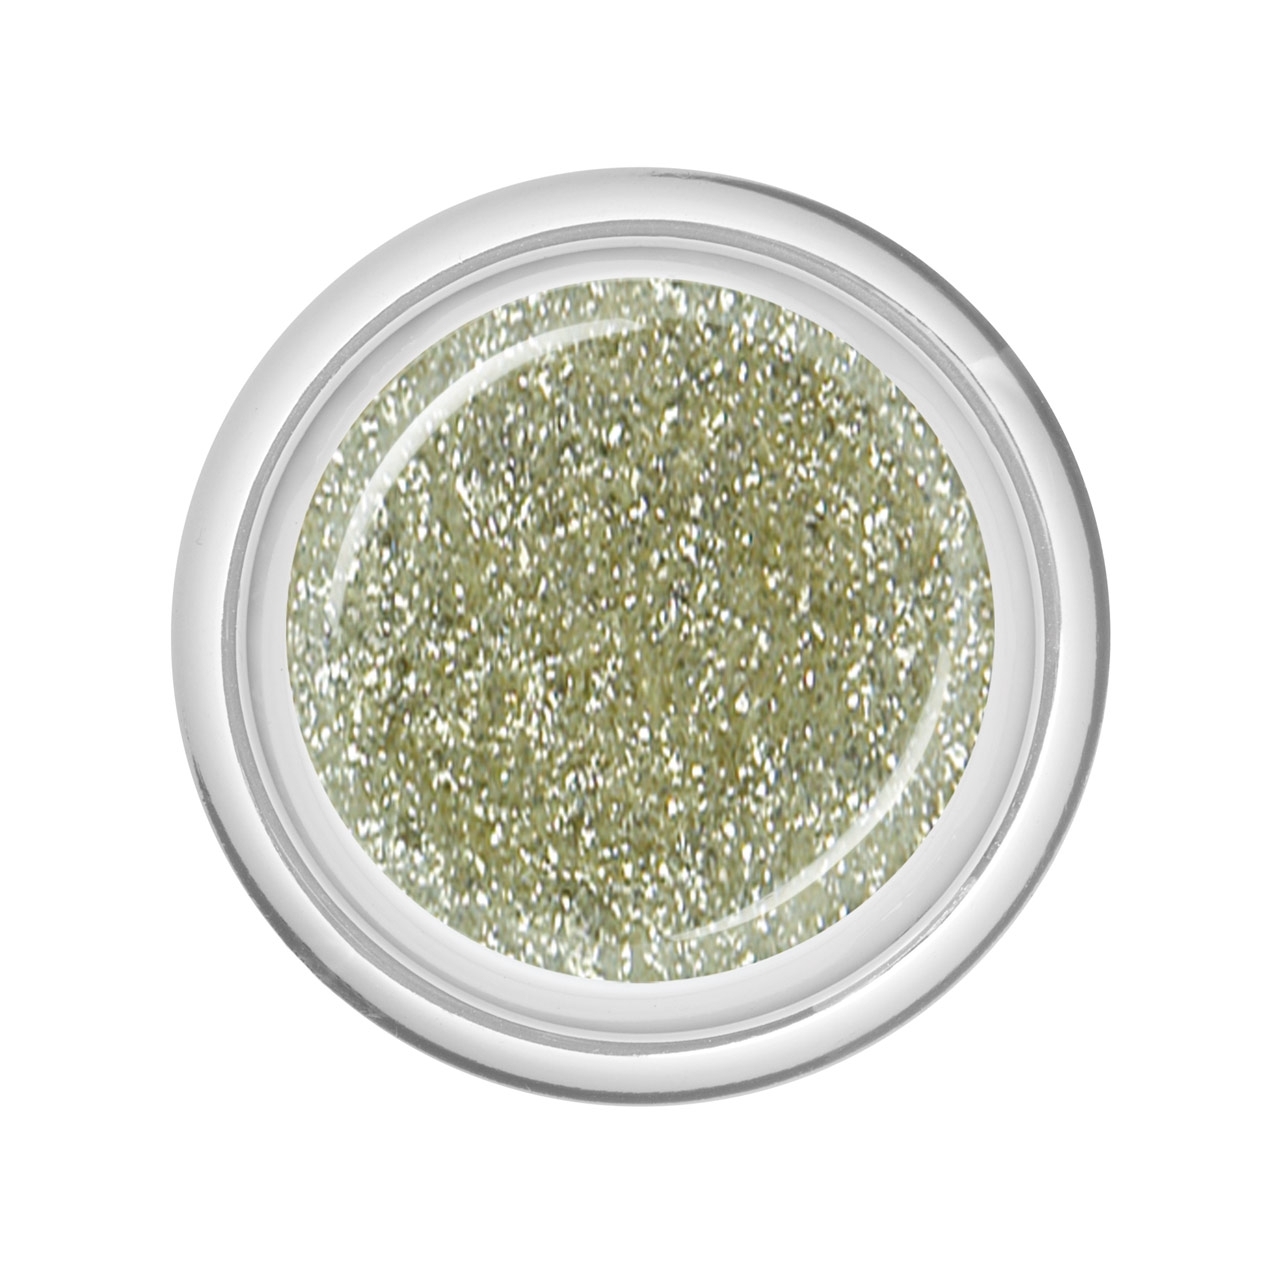 BAEHR BEAUTY CONCEPT - NAILS Colour-Gel Glitter Prosecco 5 ml